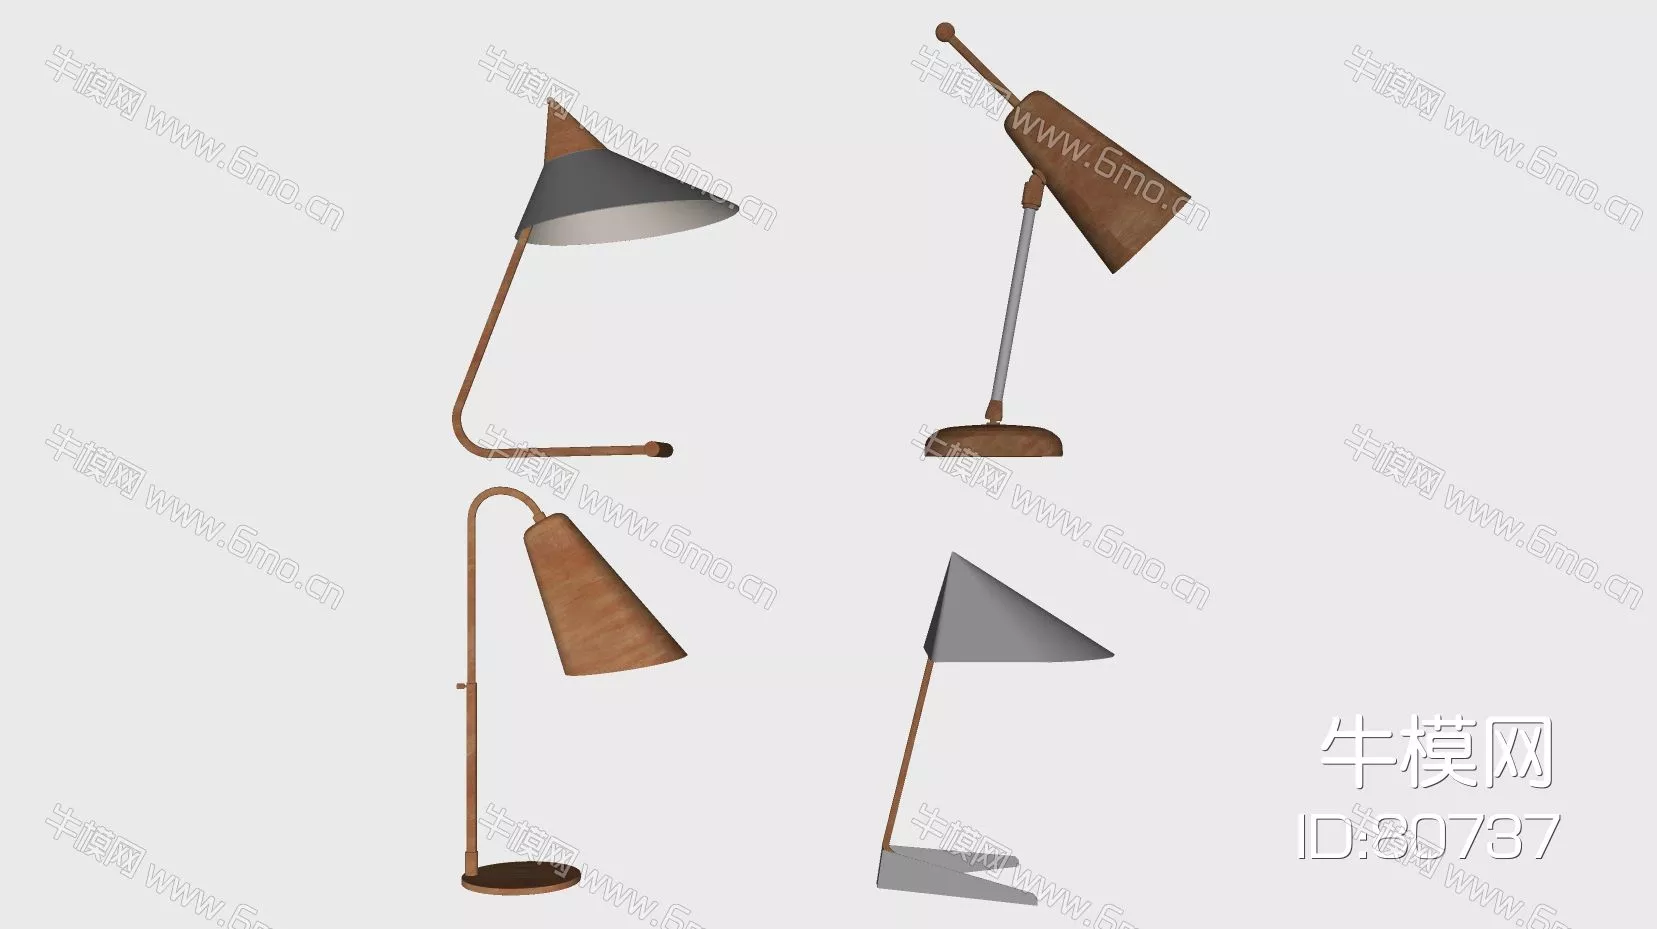 NORDIC TABLE LAMP - SKETCHUP 3D MODEL - ENSCAPE - 80737